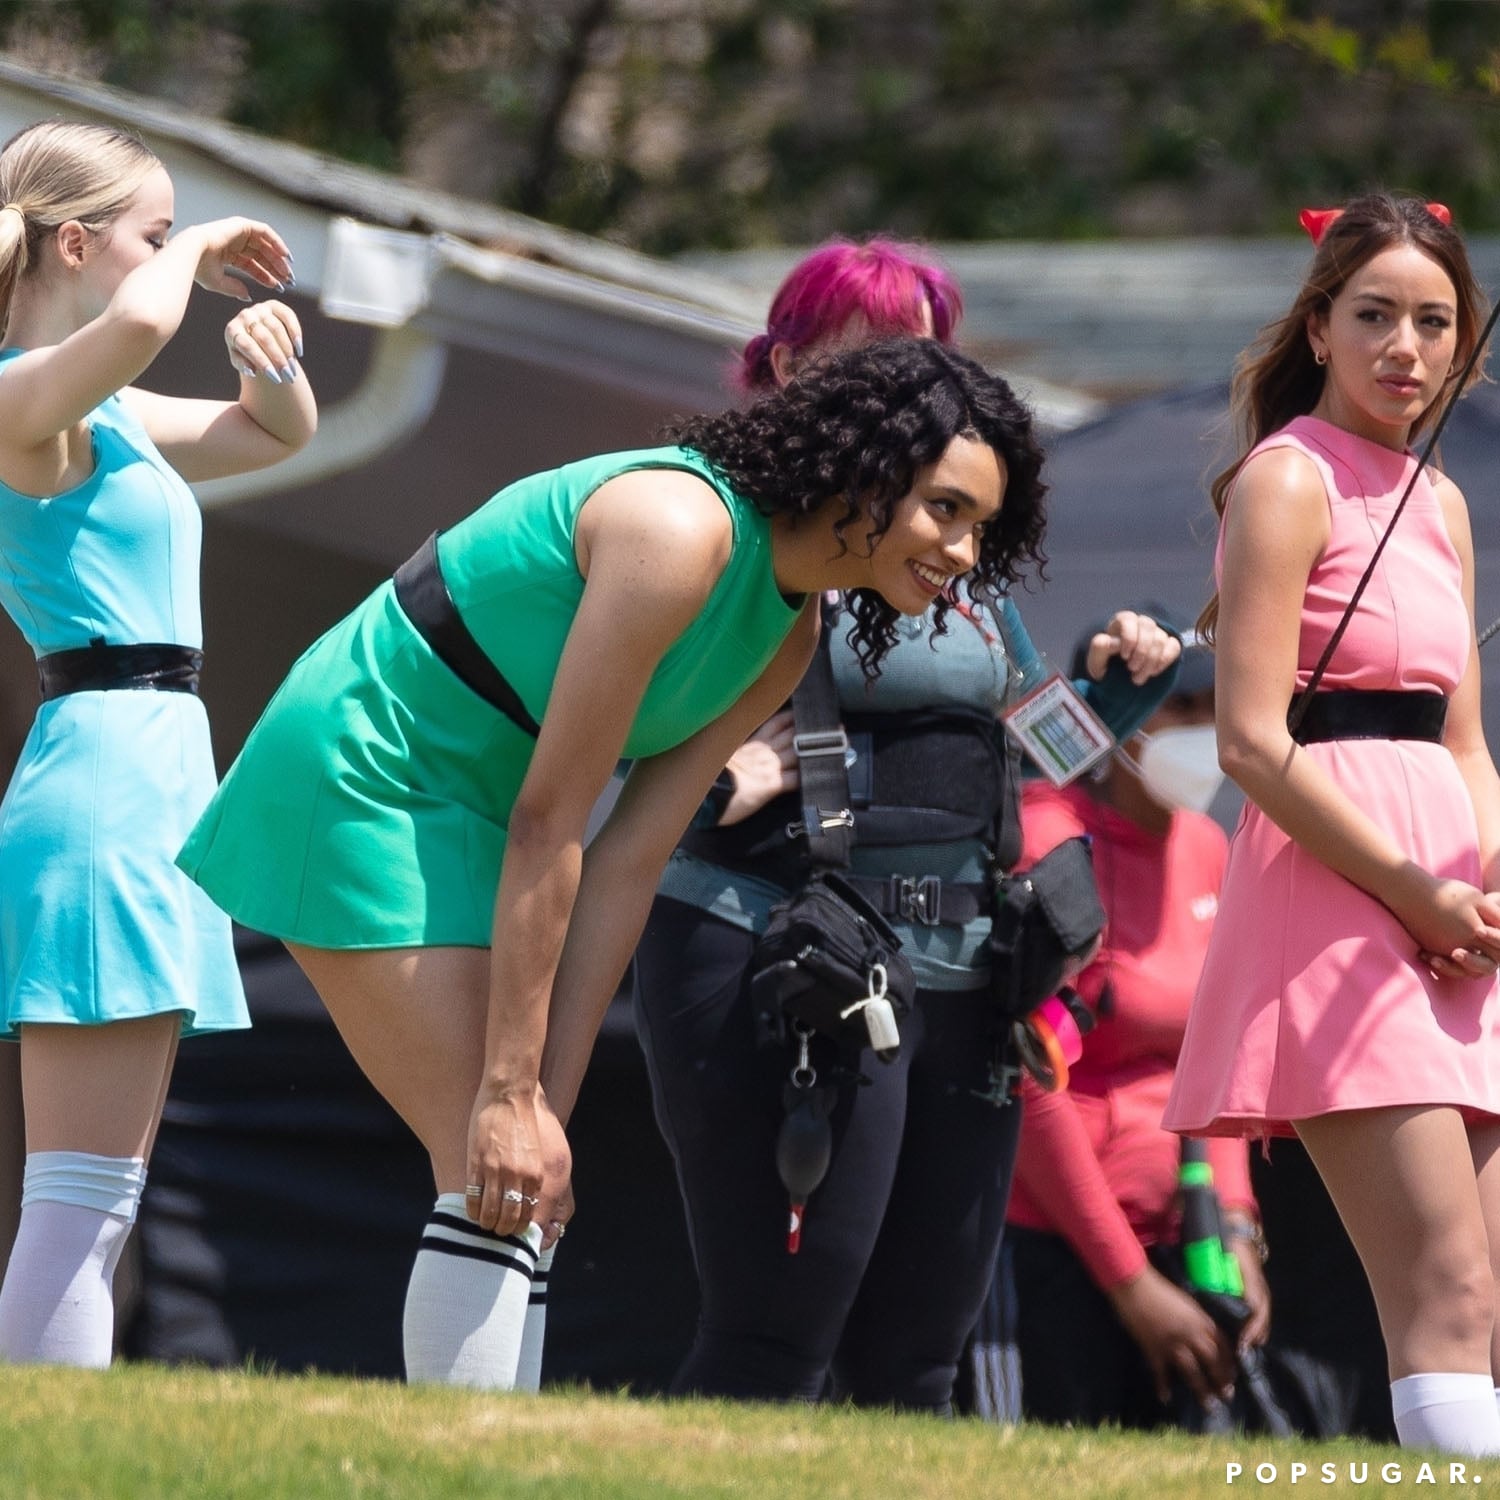 Powerpuff Girls' Live-Action Series in Development at CW